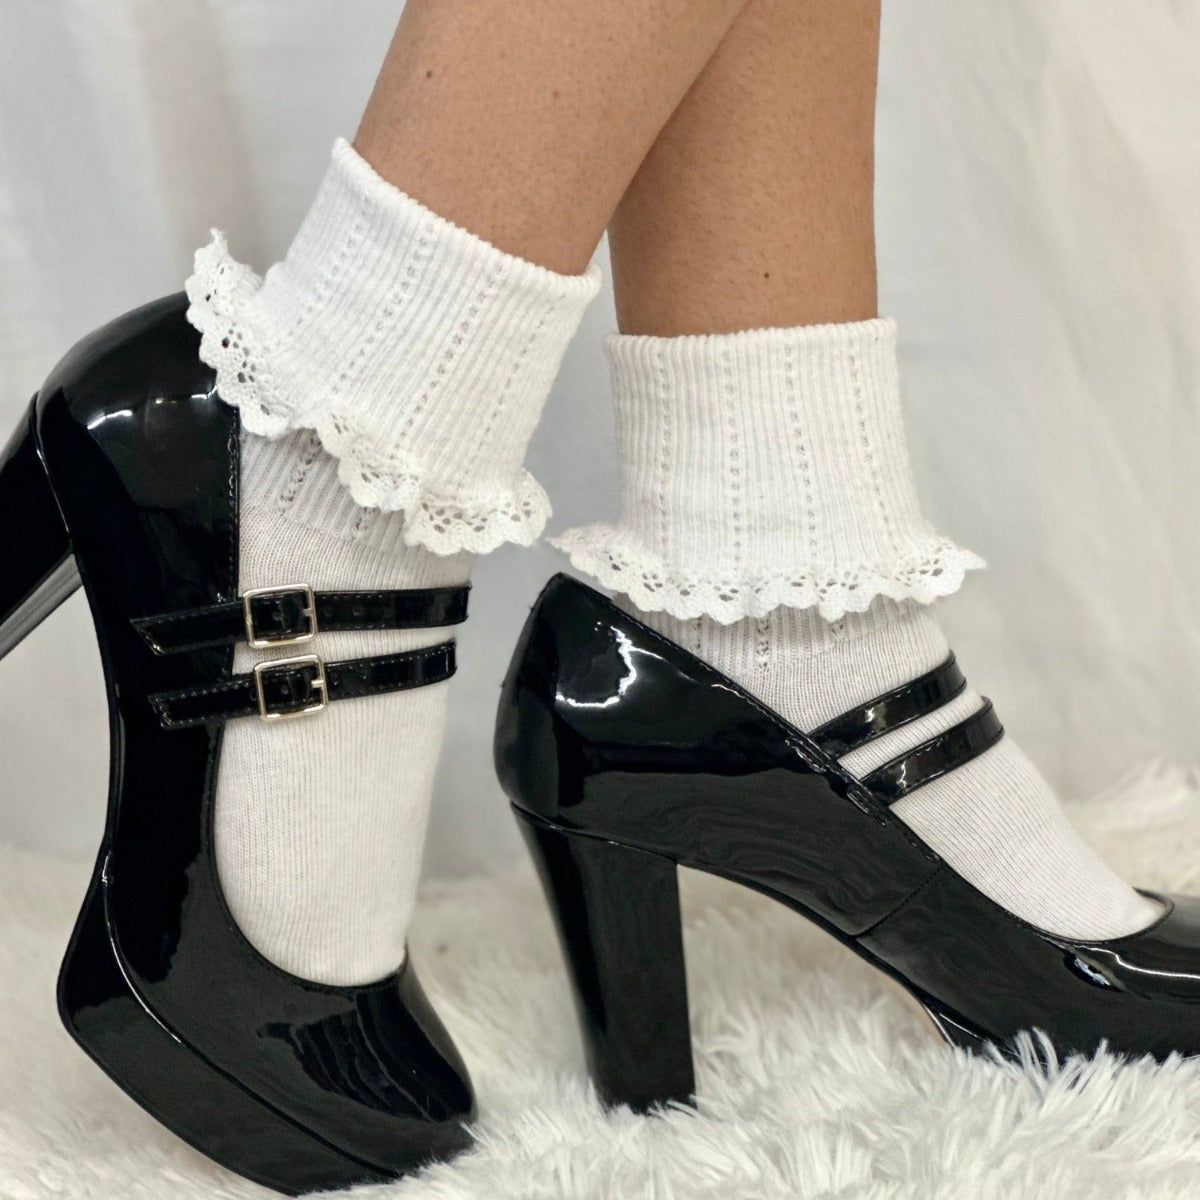 SALE DISCOUNT lace cuff cotton socks white | cute lace cuff socks women ...